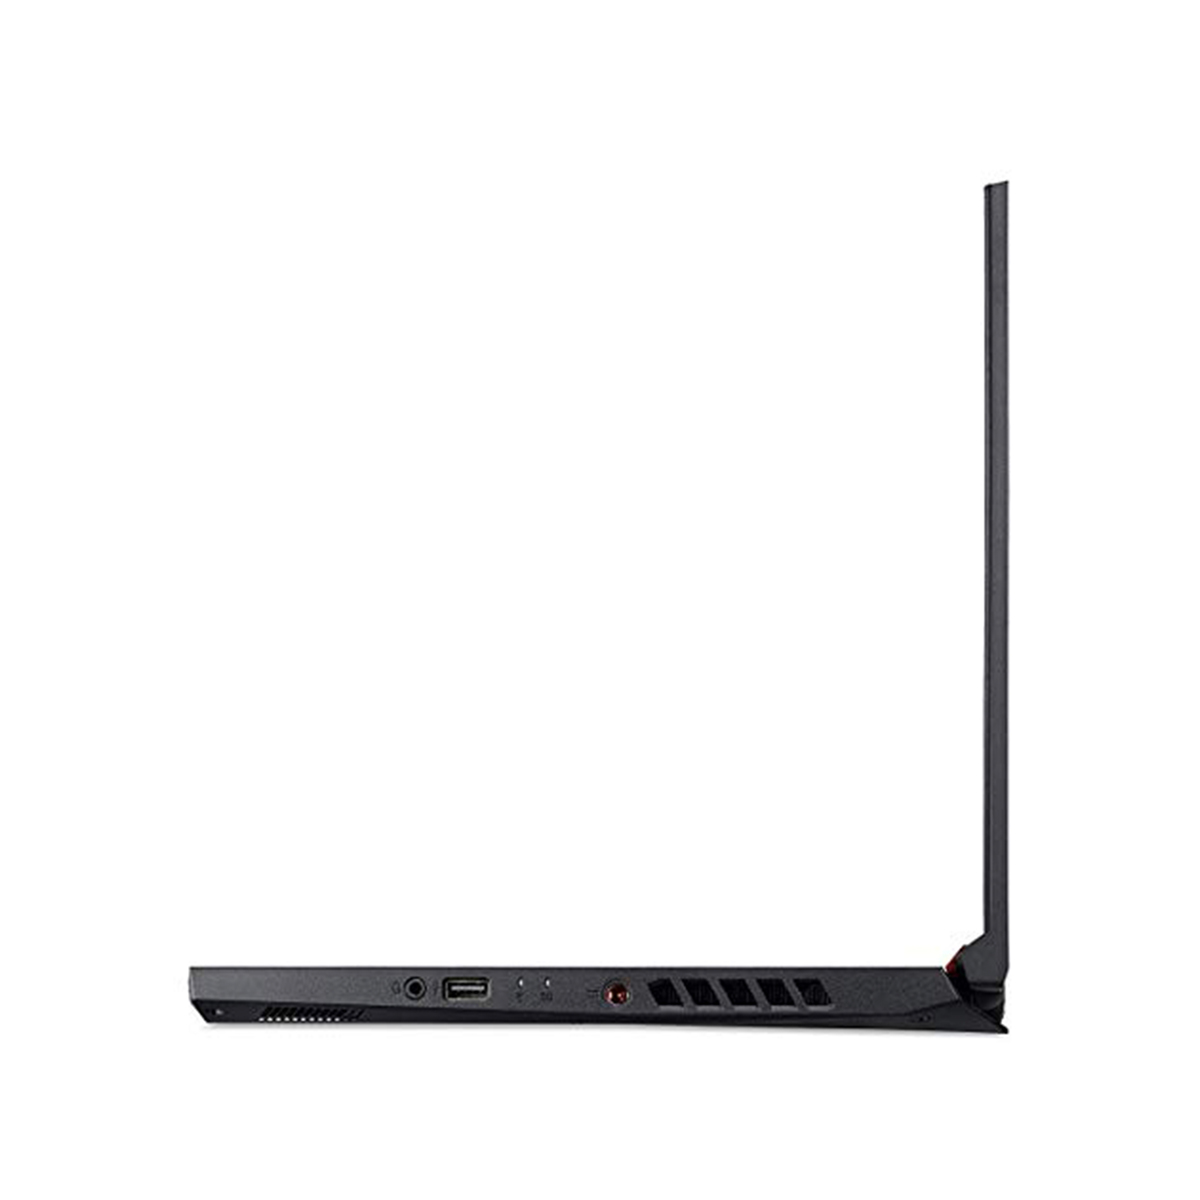 Acer Nitro 5 AN515-54 Gaming Laptop, Intel Core i7-9750H, 15.6" FHD, 1TB SSD, 16GB RAM, 4GB NVIDIA GeForce GTX 1650,Black